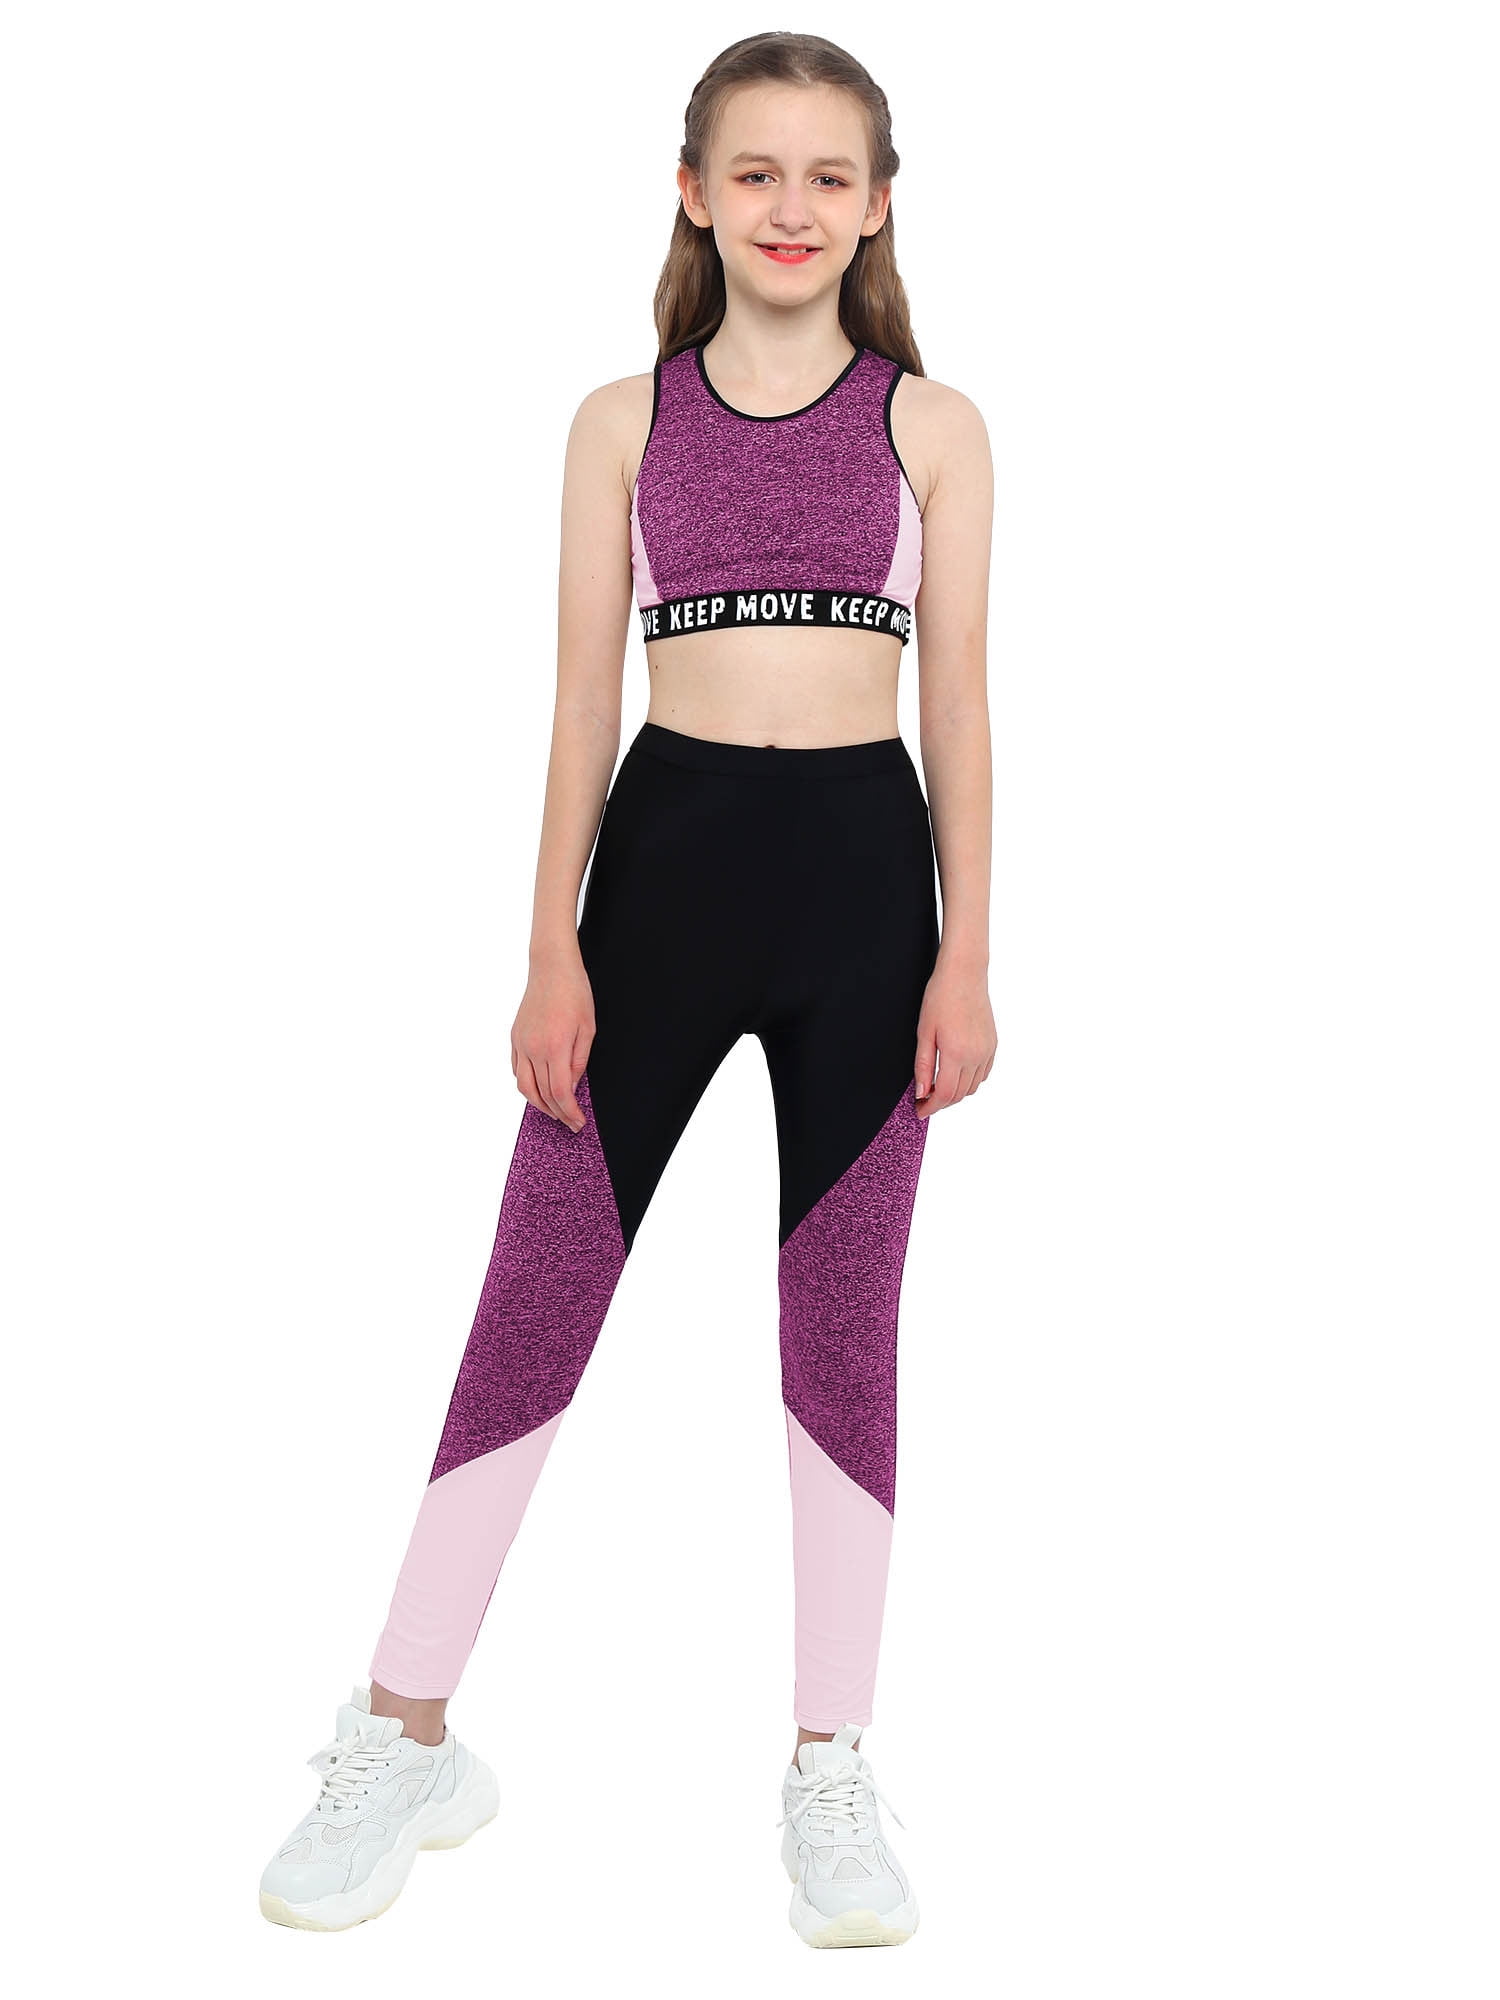 YEAHDOR Kids Girls Gymnastics Dance Outfit Racer Back Crop Tank Top with  Leggings Set Pink Black 10 